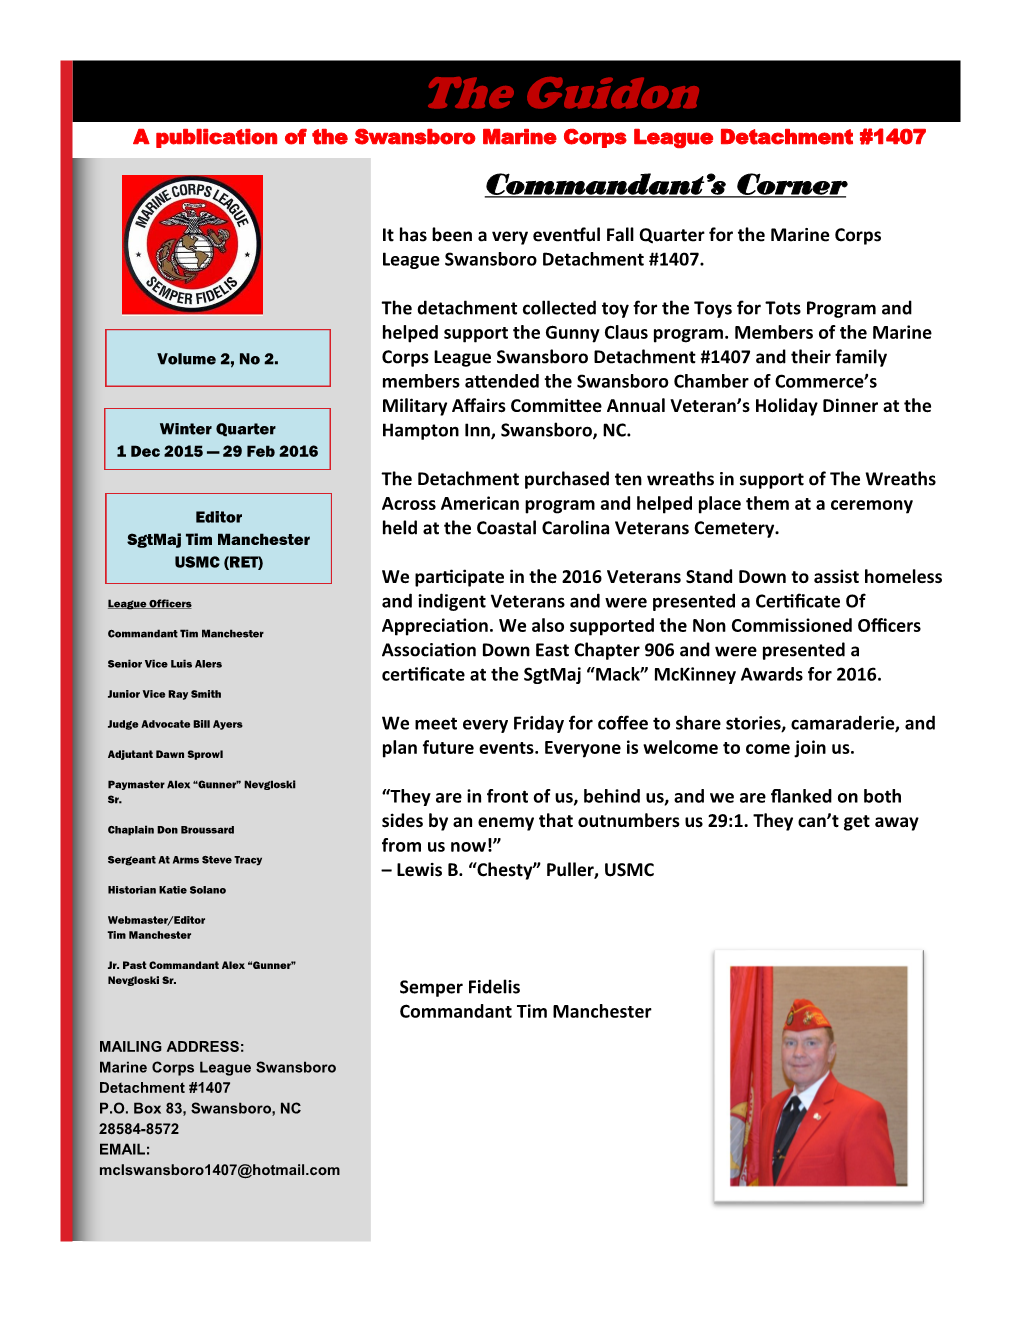 The Guidon a Publication of the Swansboro Marine Corps League Detachment #1407 Commandant’S Corner